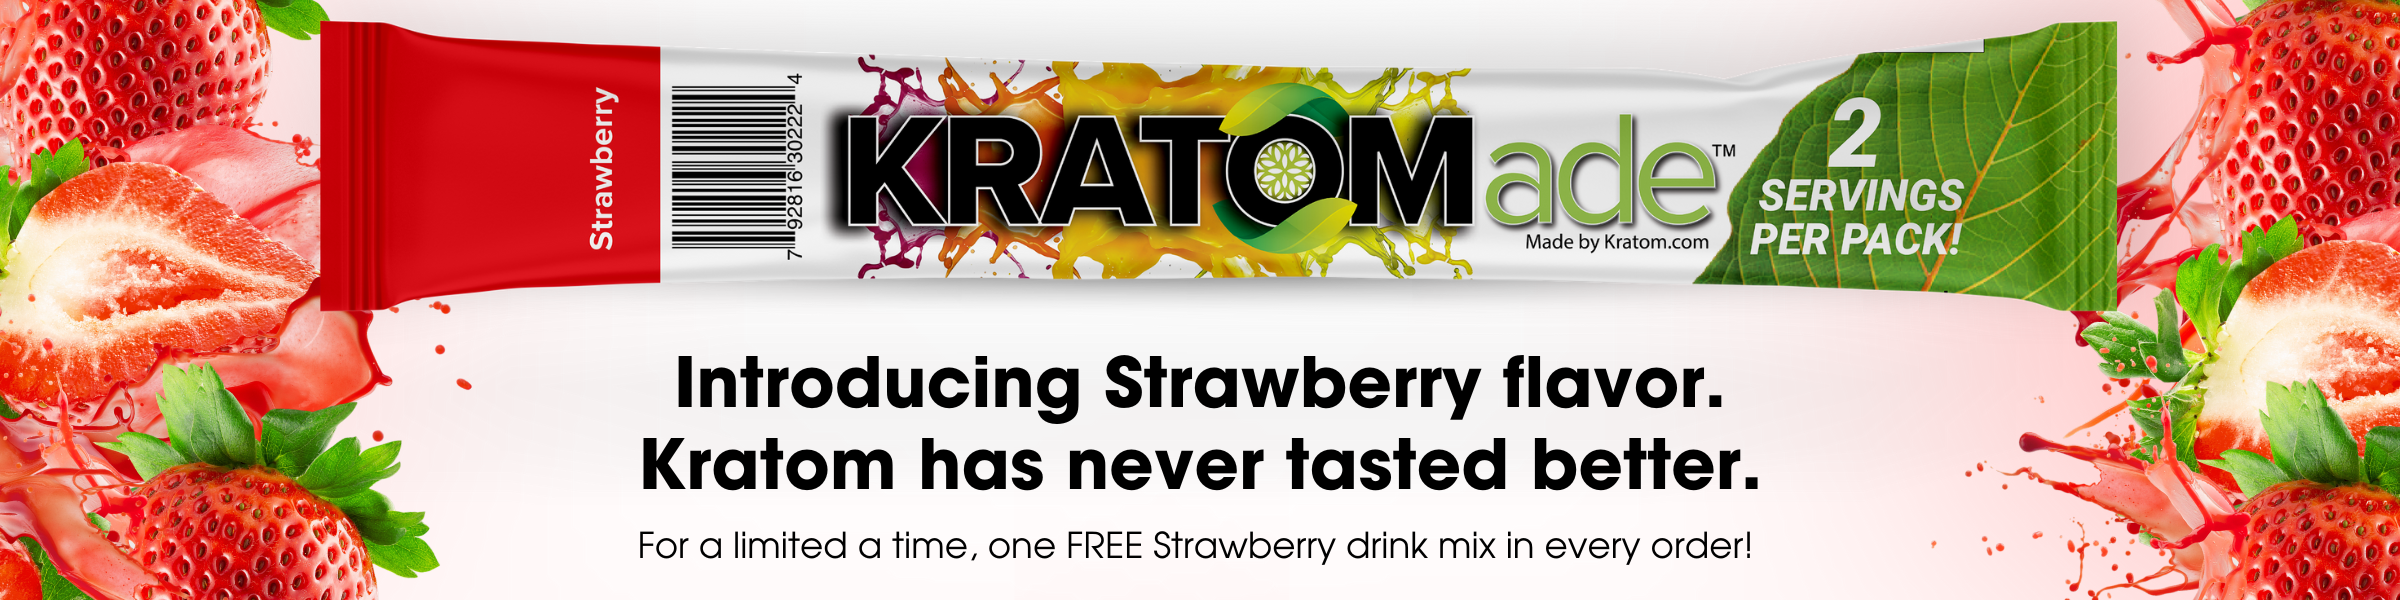 Kratomade Strawberry Drink Mix